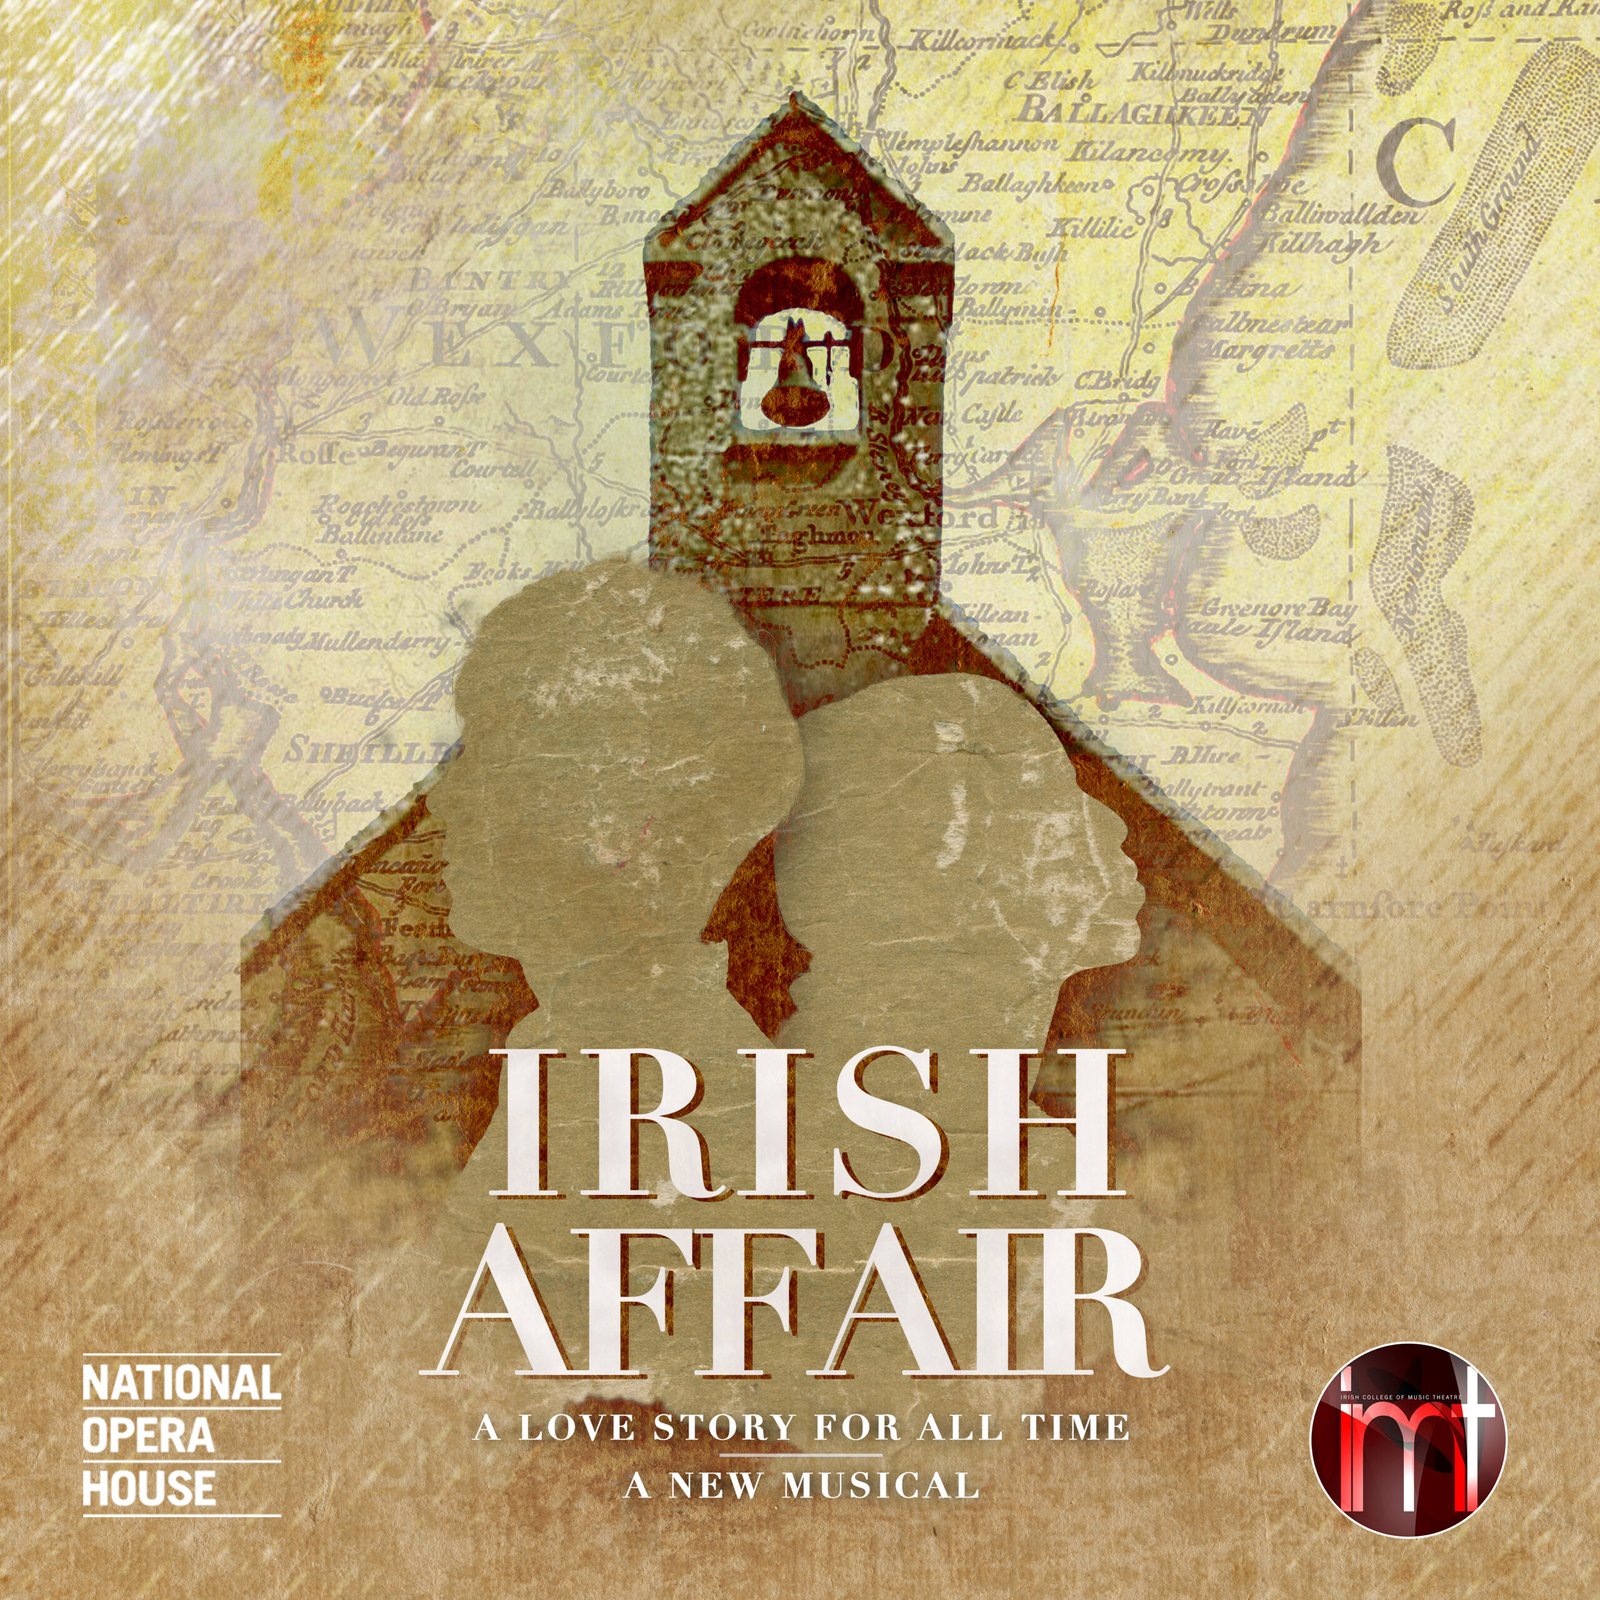 The Irish Affair – Promotional Artwork